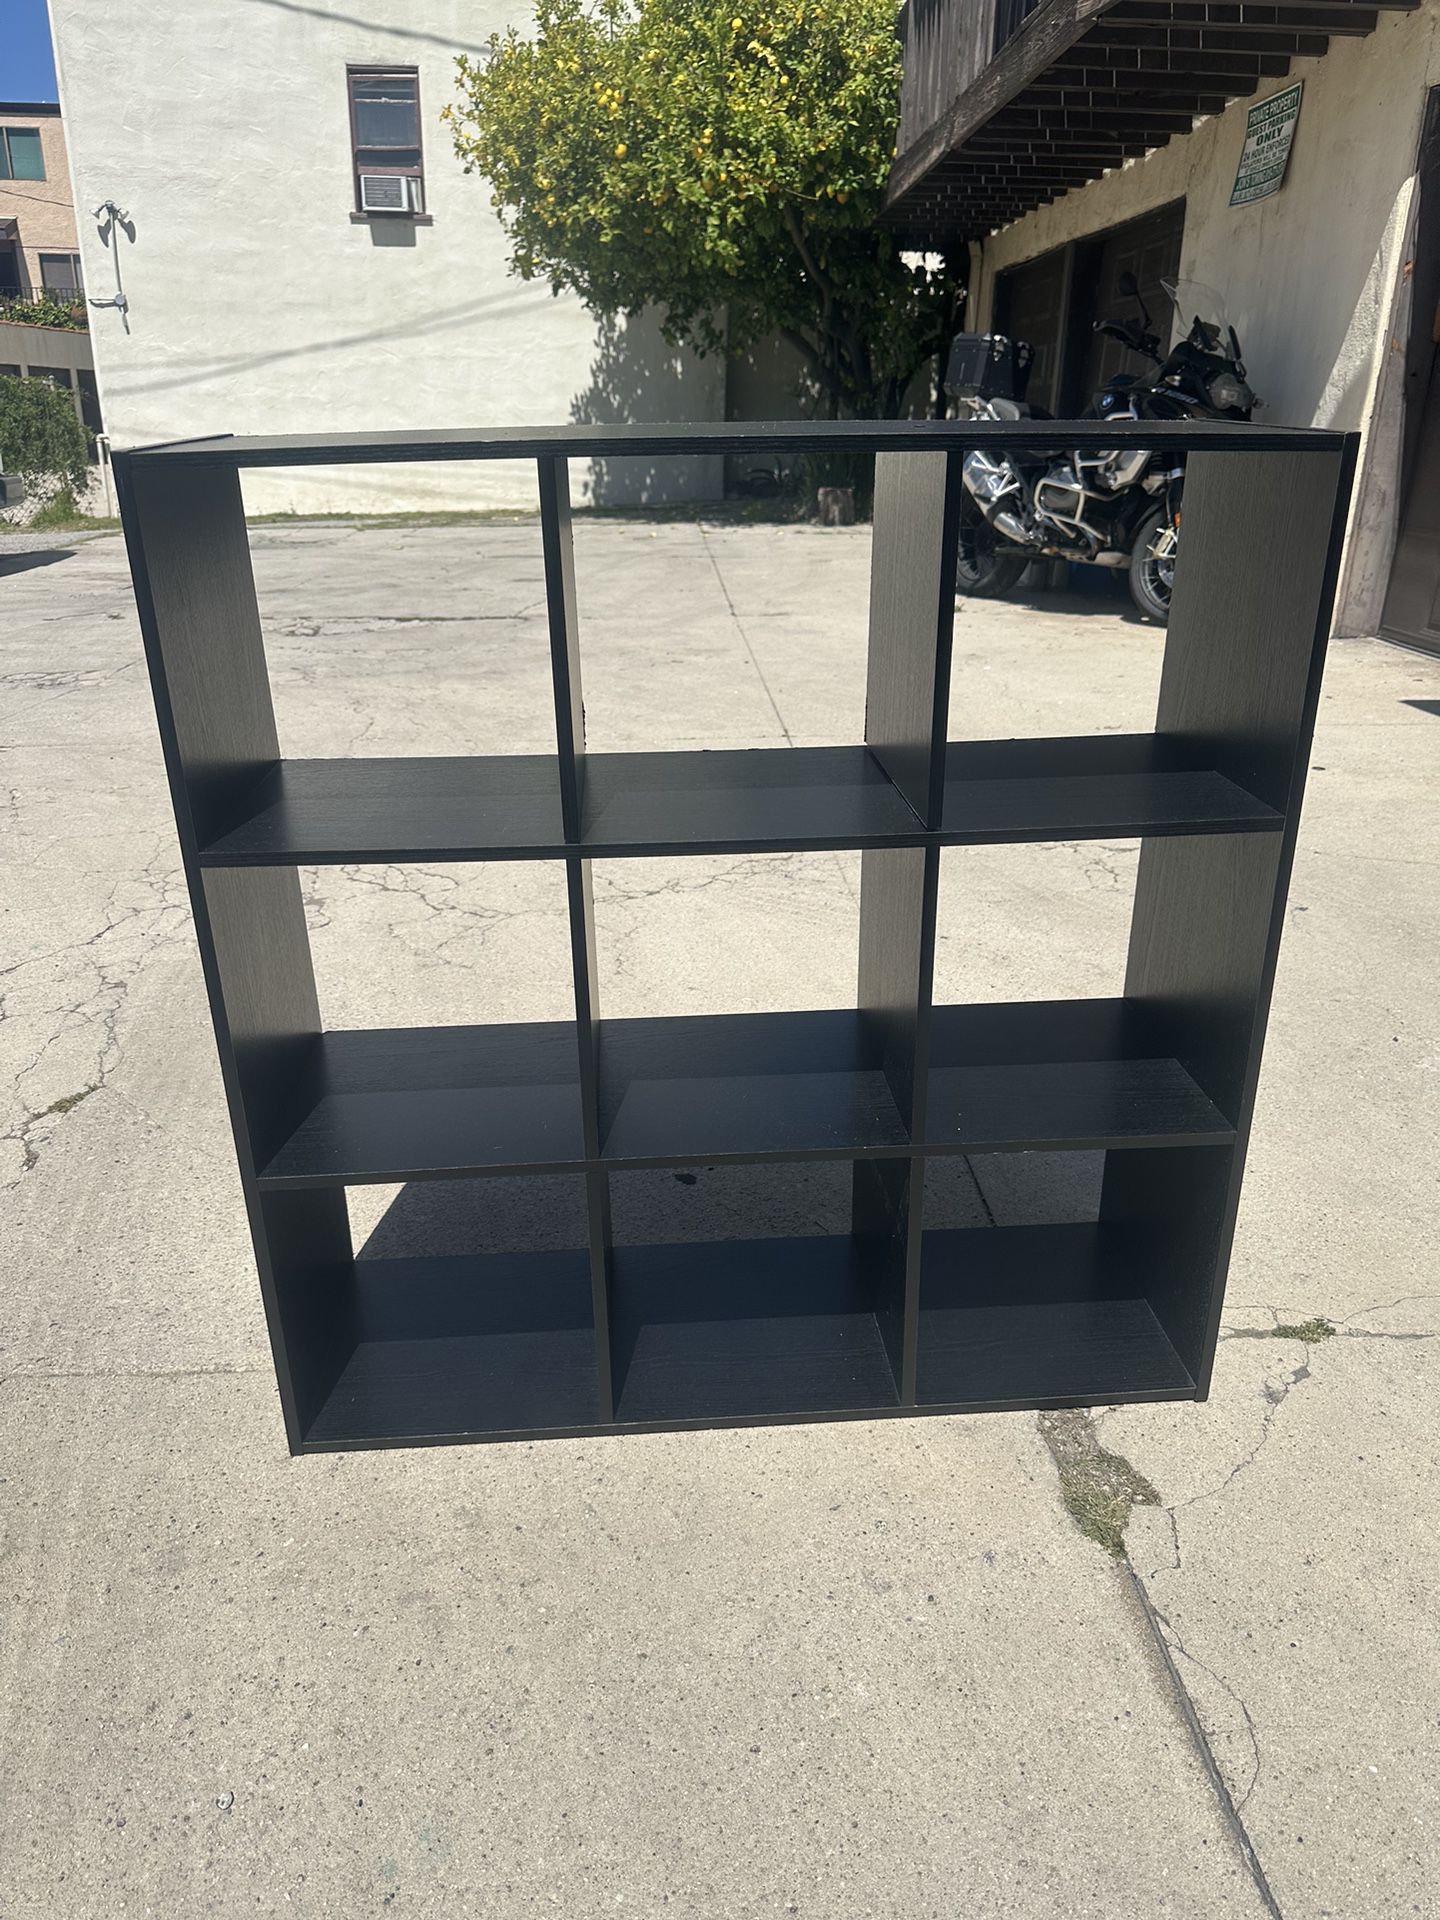 9 Cube Shelve Organizer $87 Pick Up In Glendale 